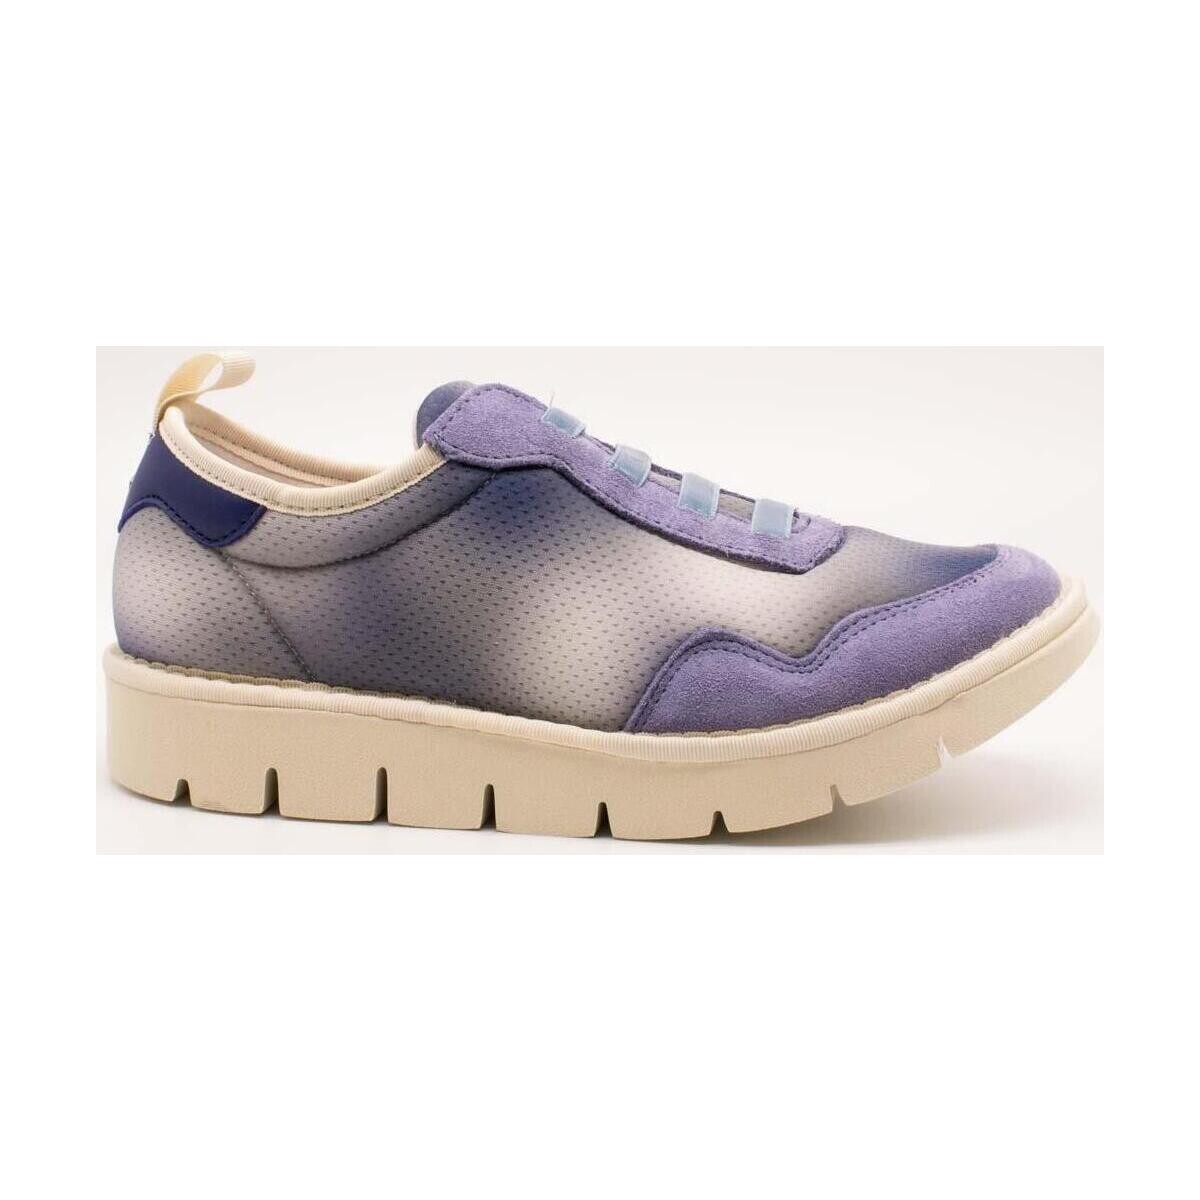 Skor Dam Sneakers Panchic  Violett